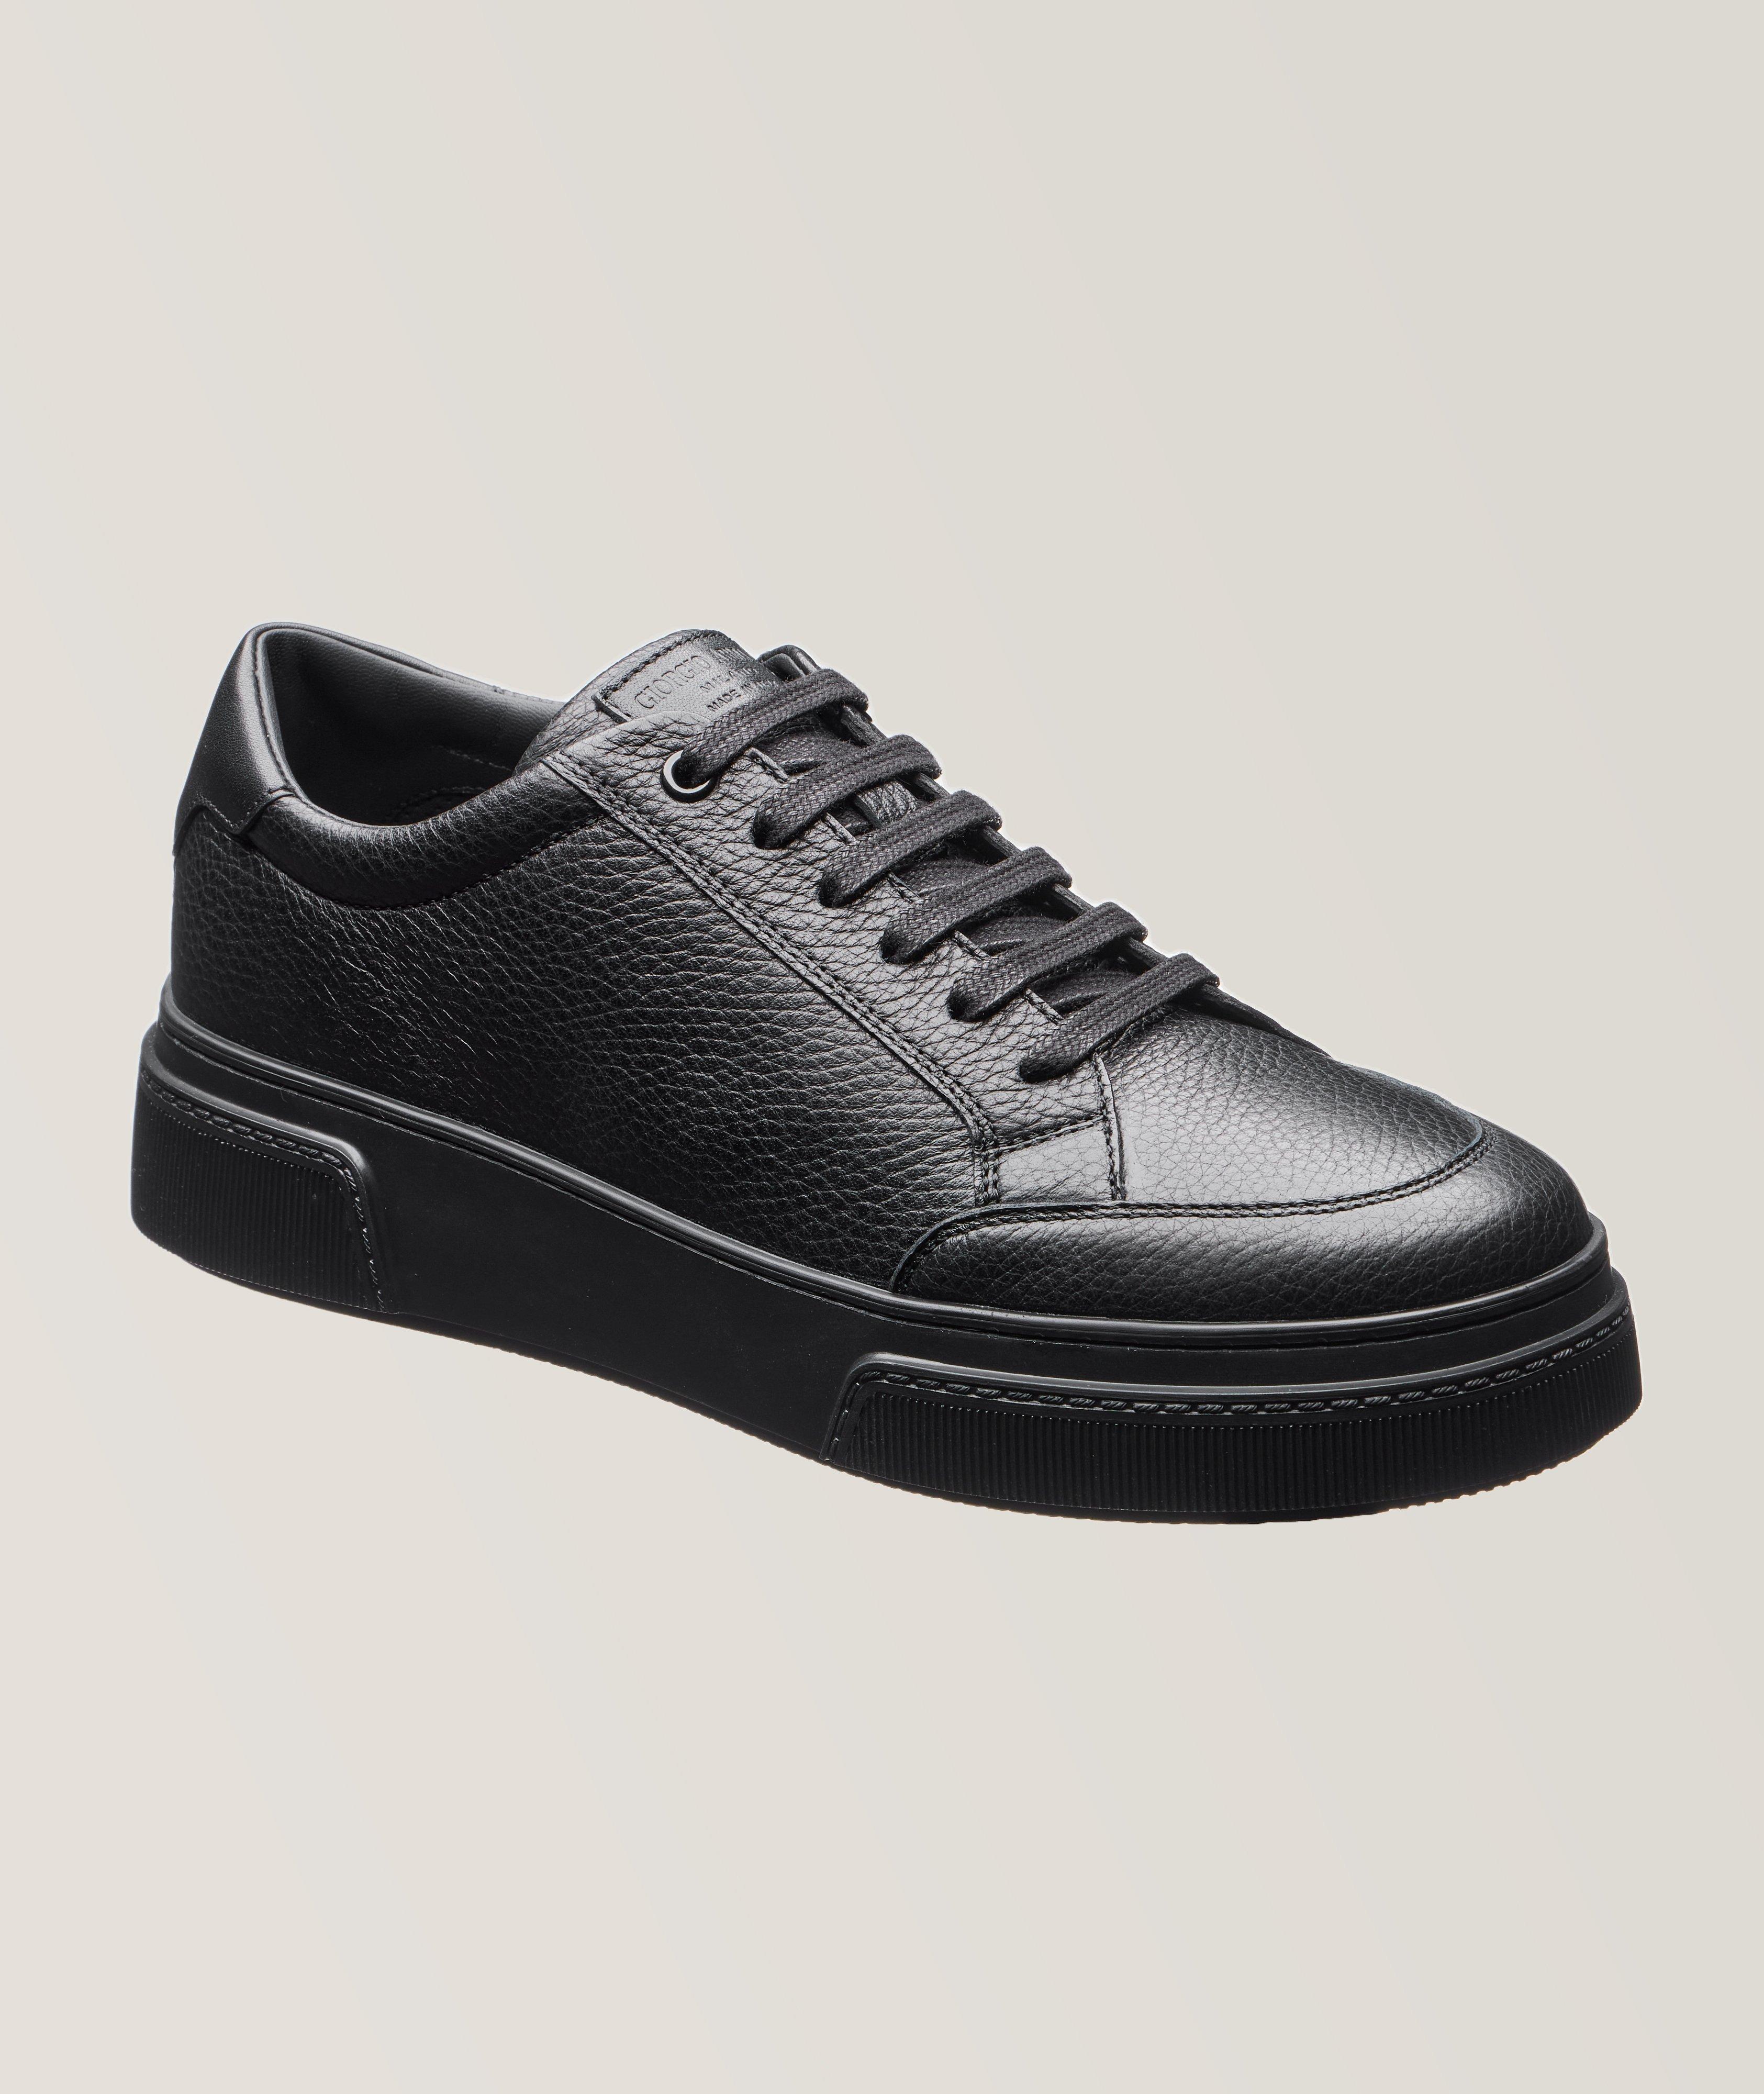 Giorgio Armani Grained Leather Sneakers